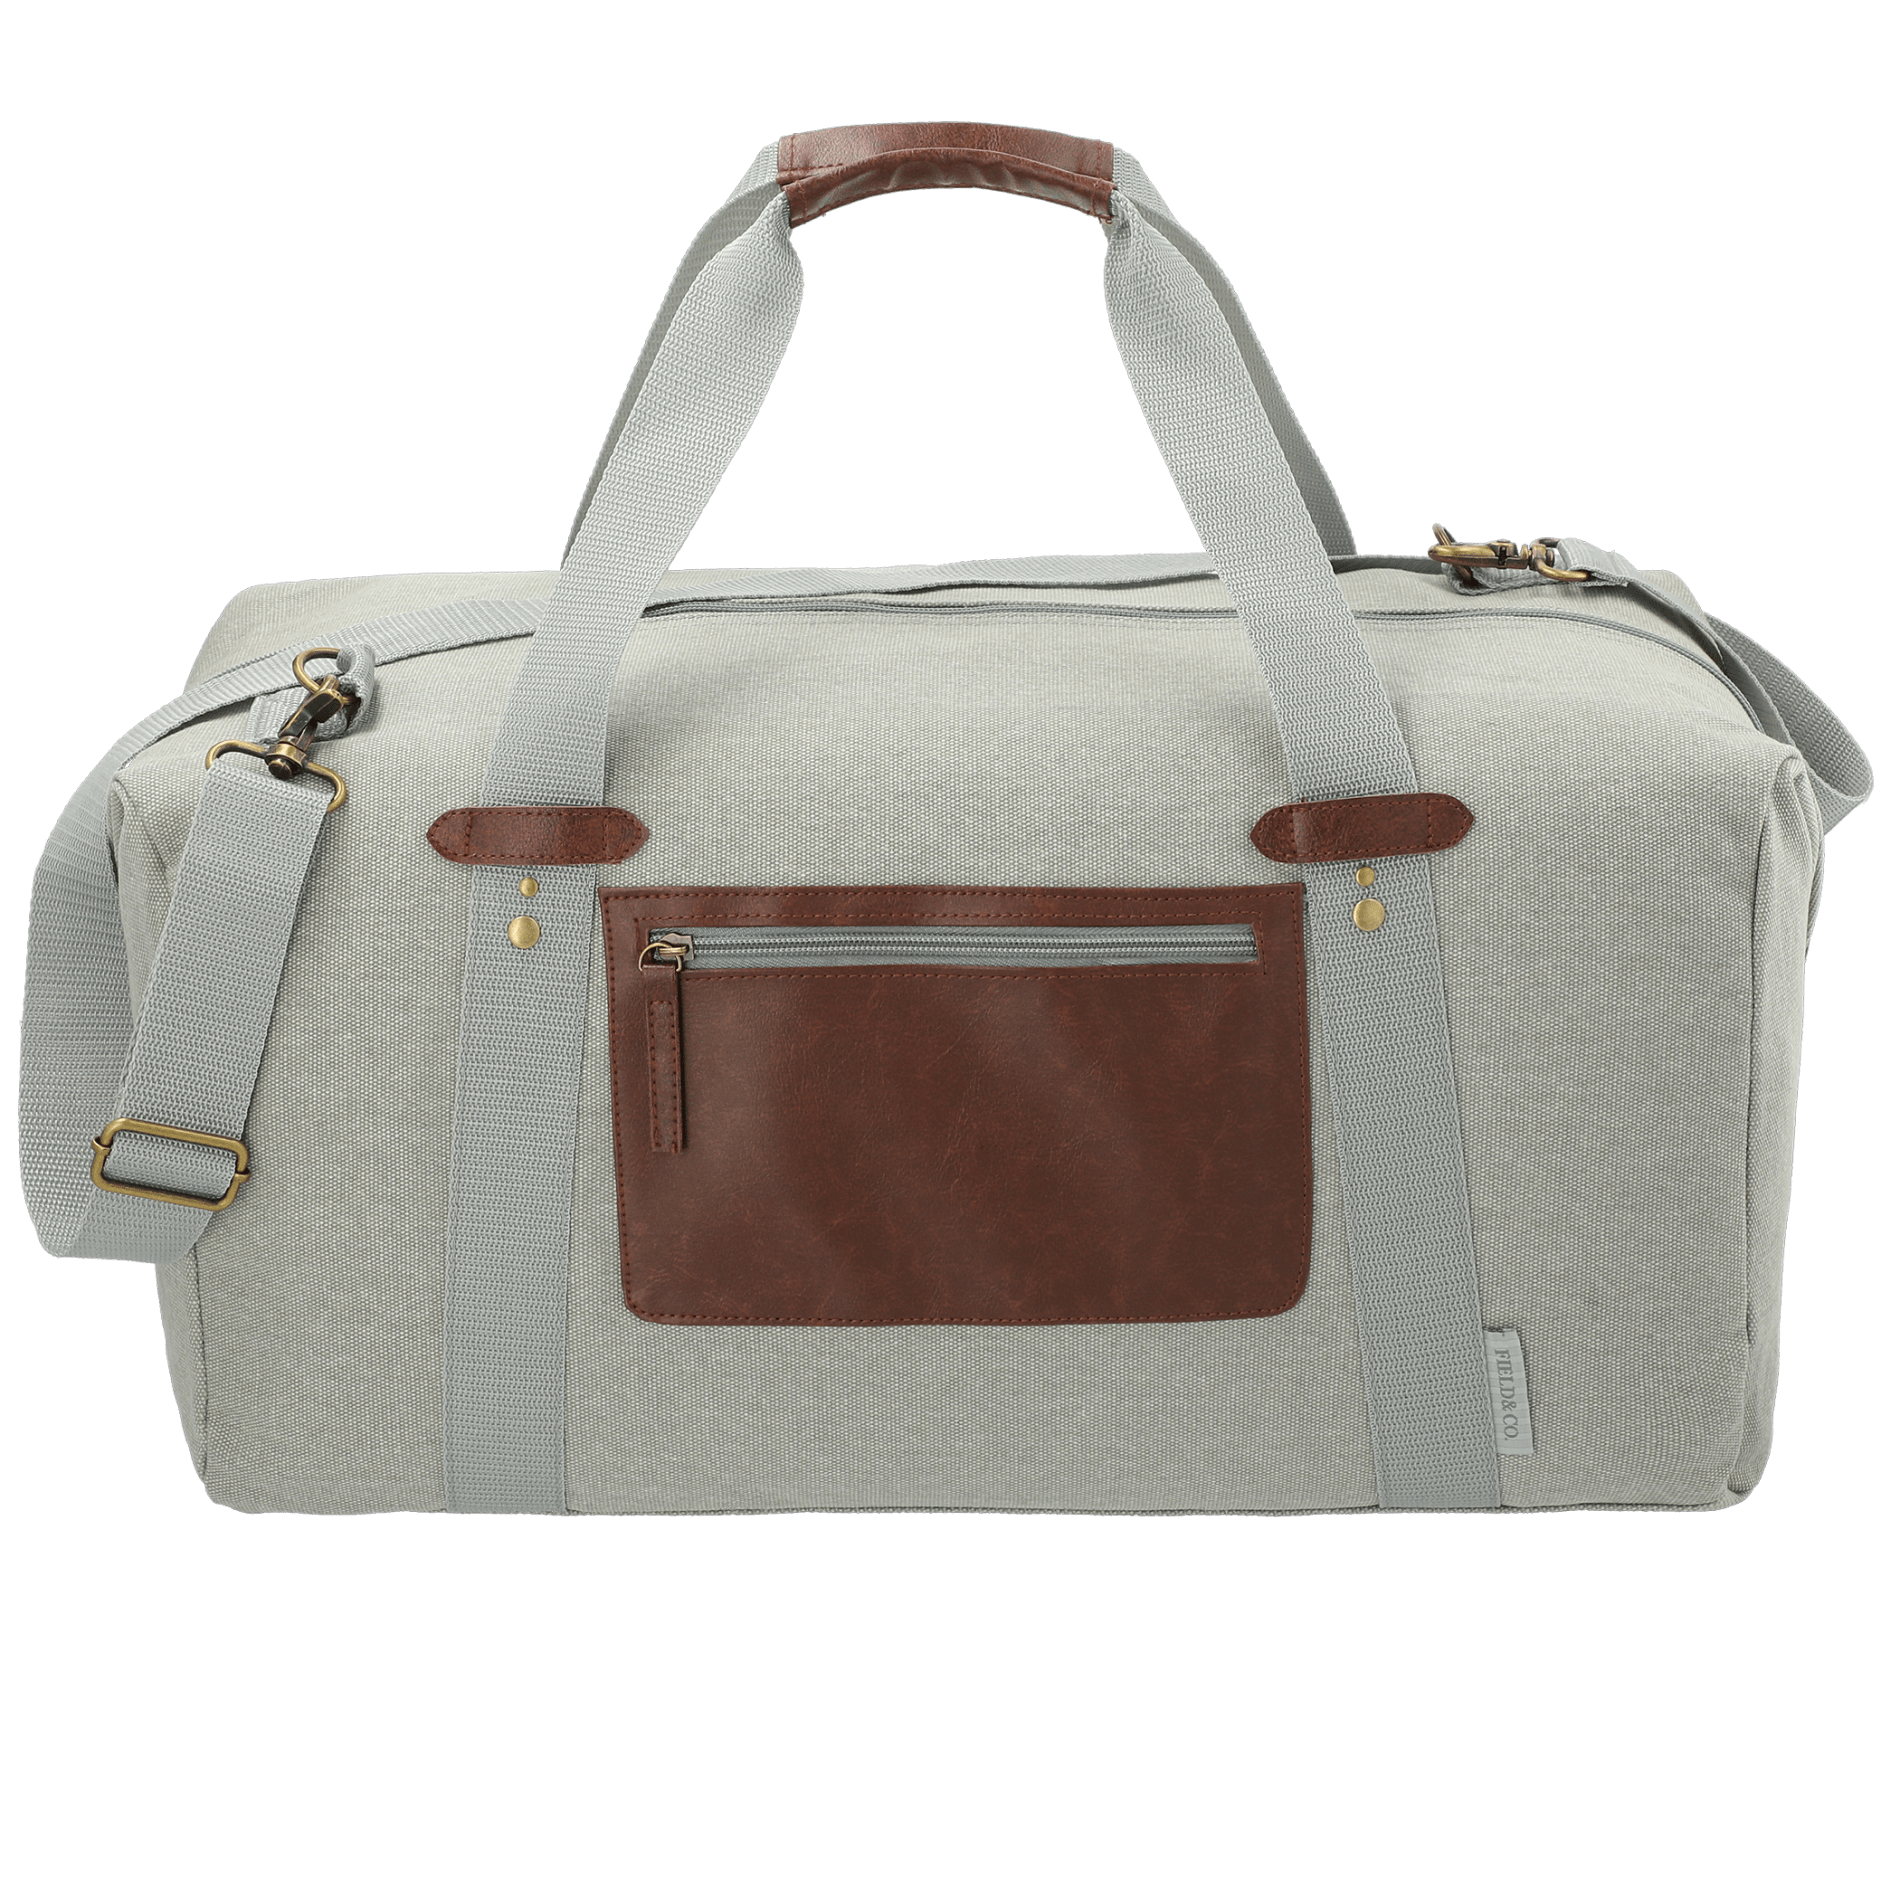 Field & Co. 7950-80 - Classic 20" Duffel Bag